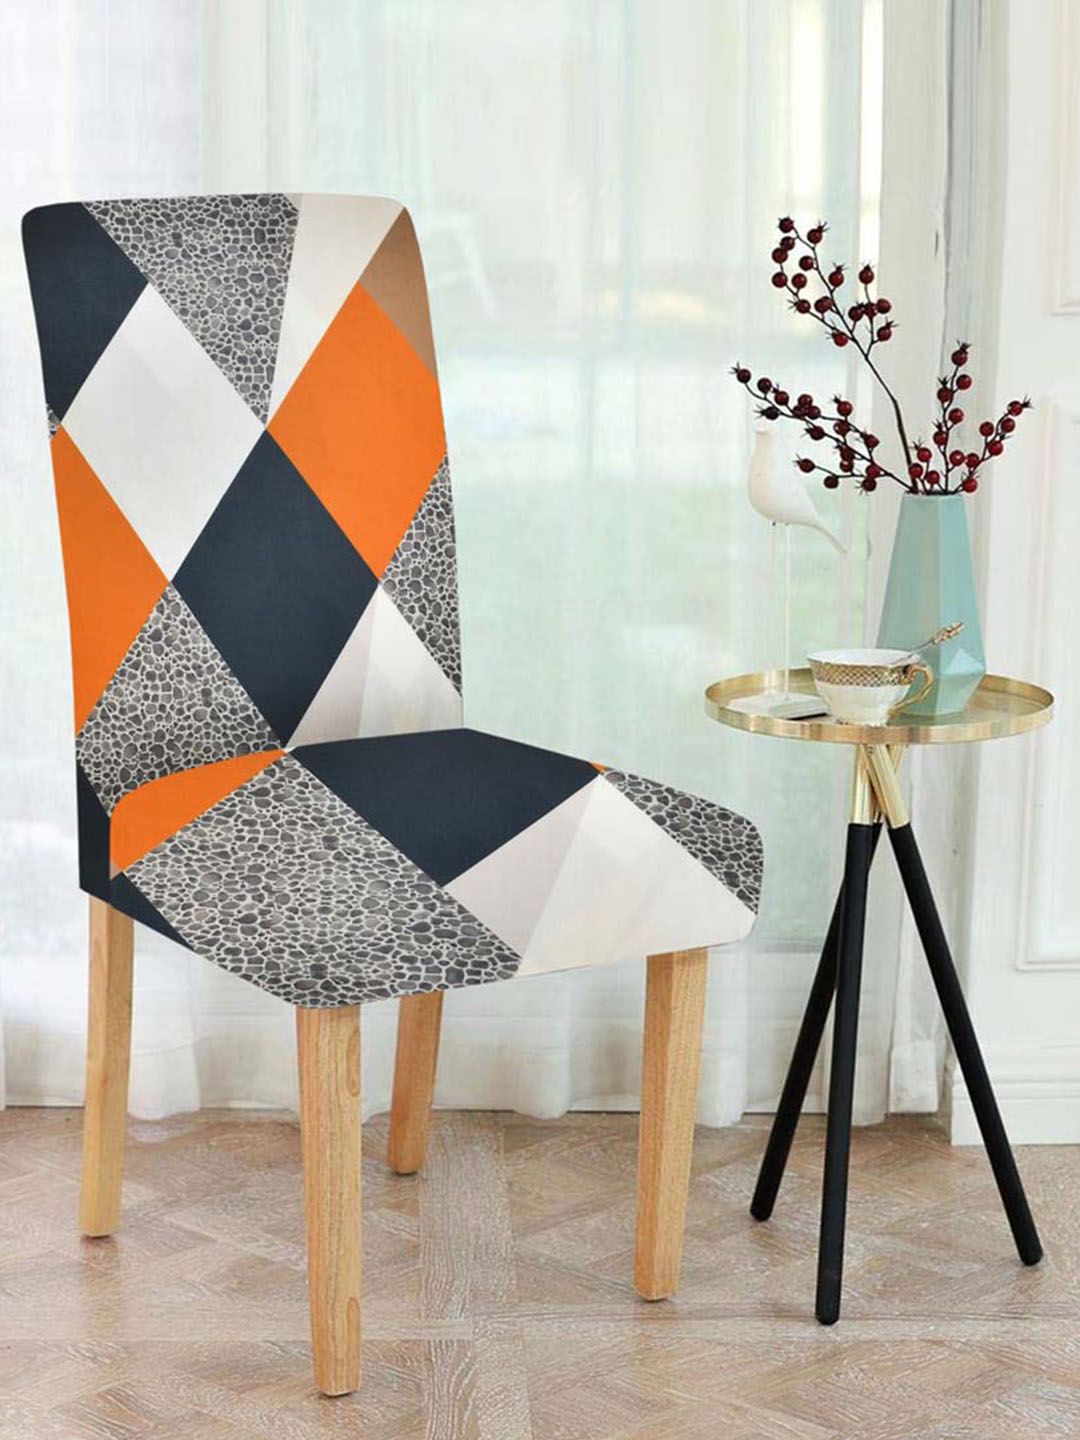 Slushy Mushy Pack of 4 Orange & White Printed Chair Cover Price in India